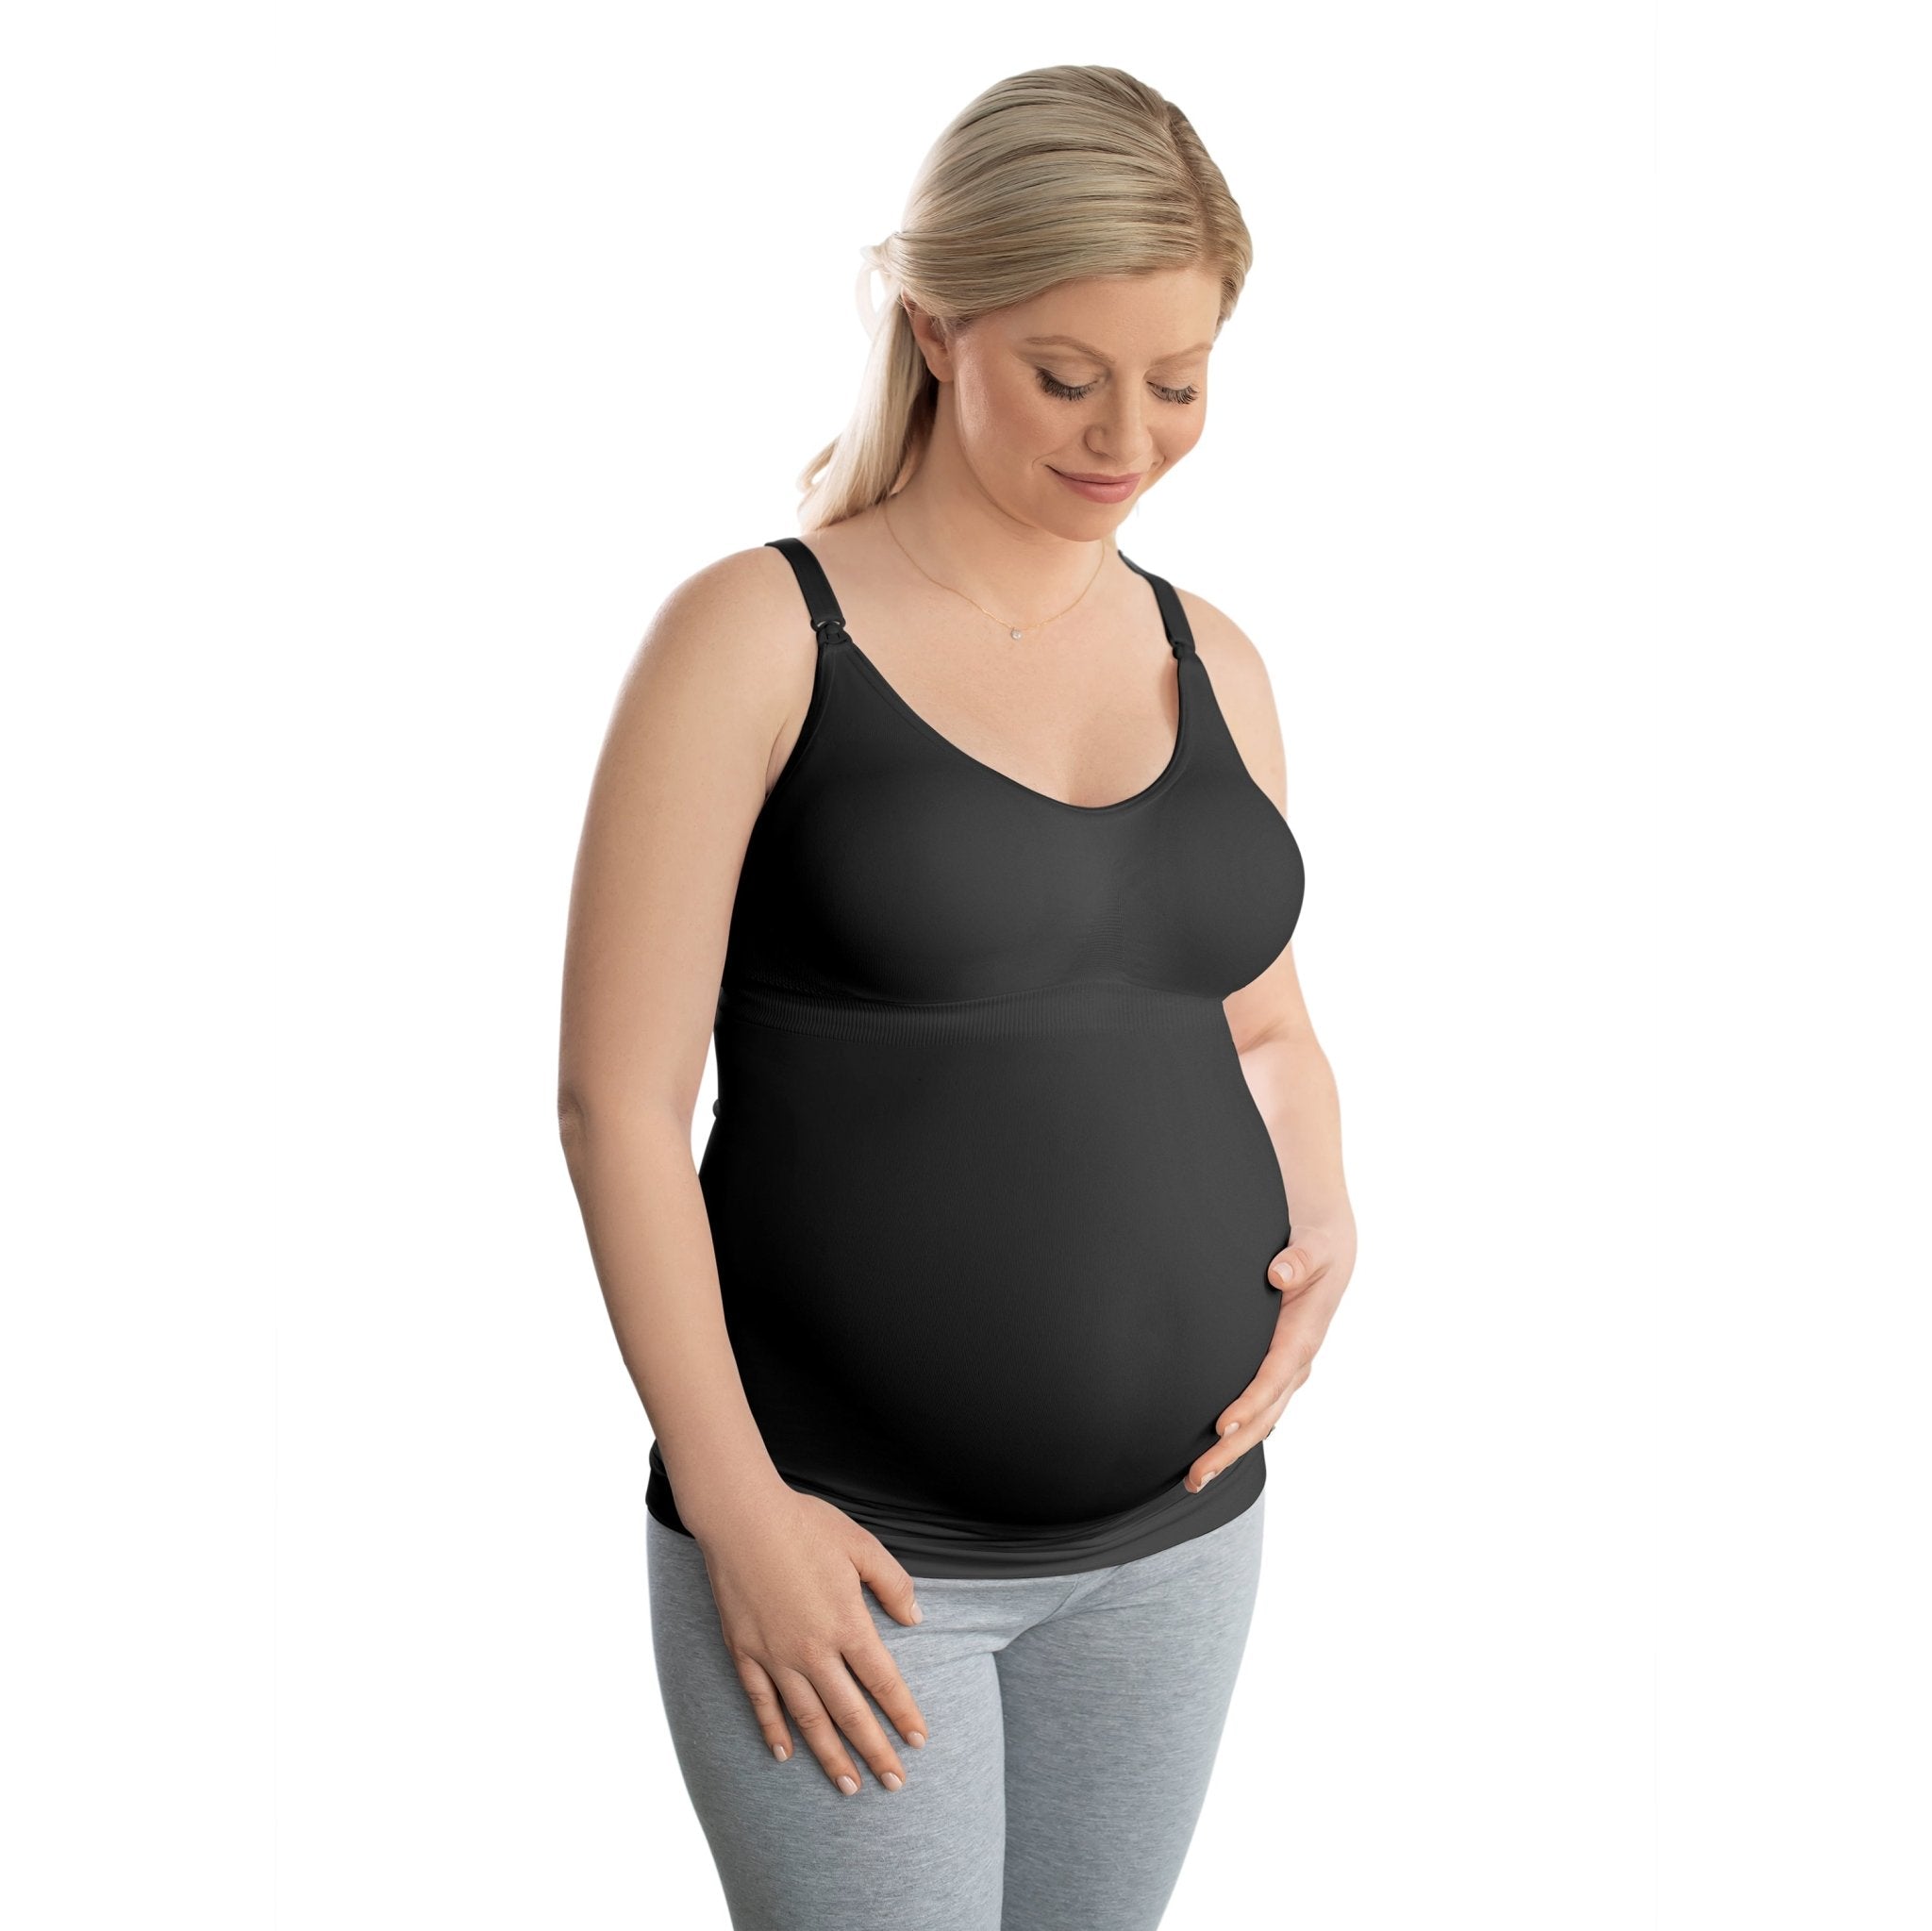 Buy Medela Maternity and Nursing Comfort Bra -- ANB Baby